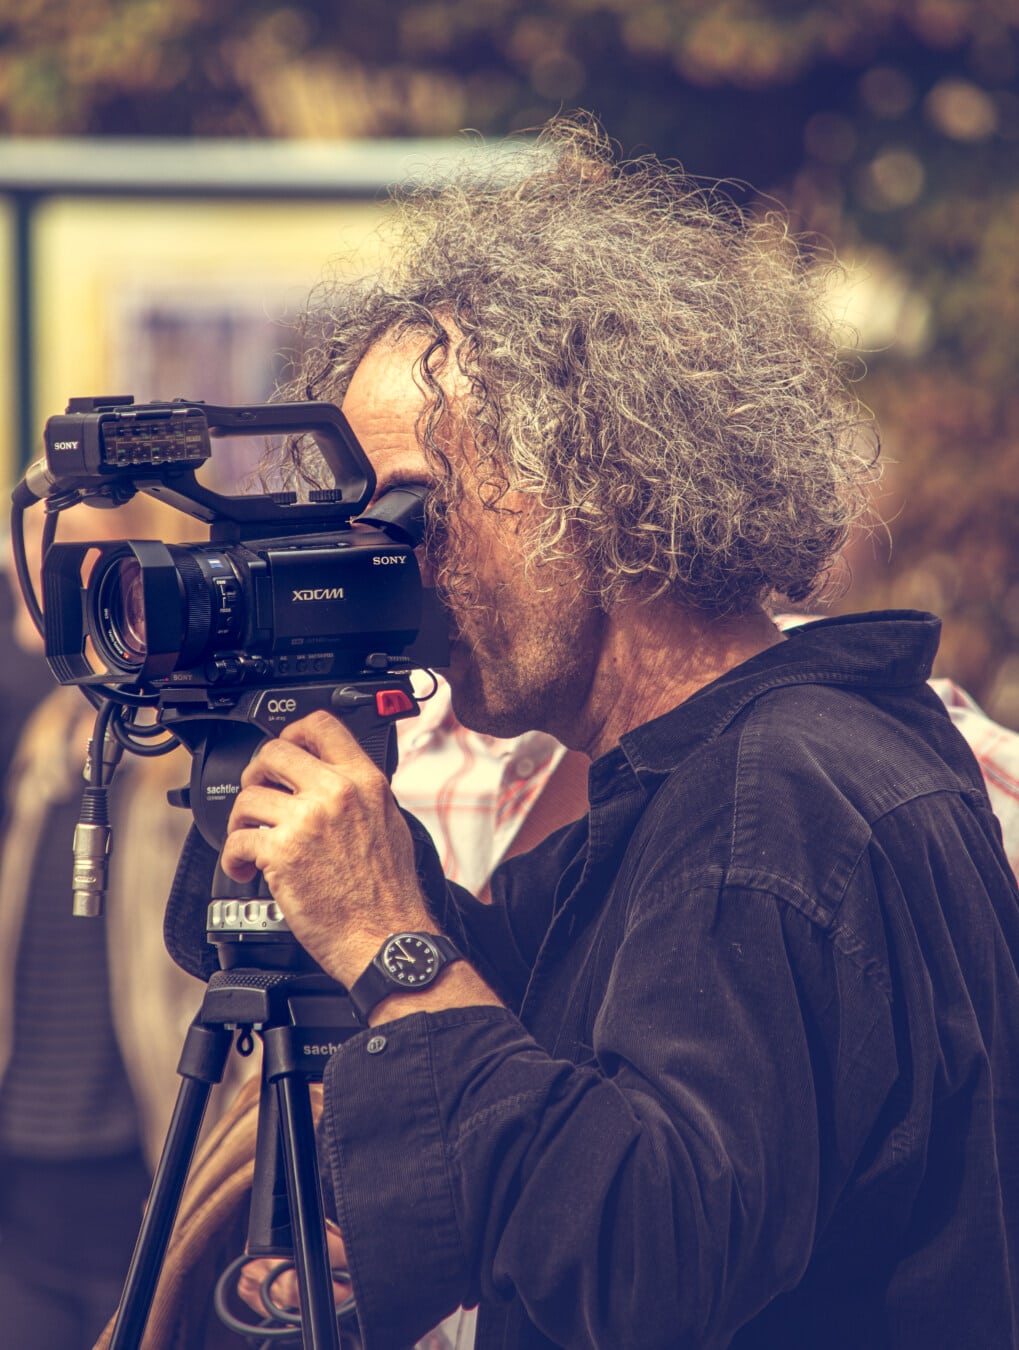 video kamera, video kaydı, kayıt, Film, fotoğrafçı, televizyon, ekipman, objektif, portre, gazeteci